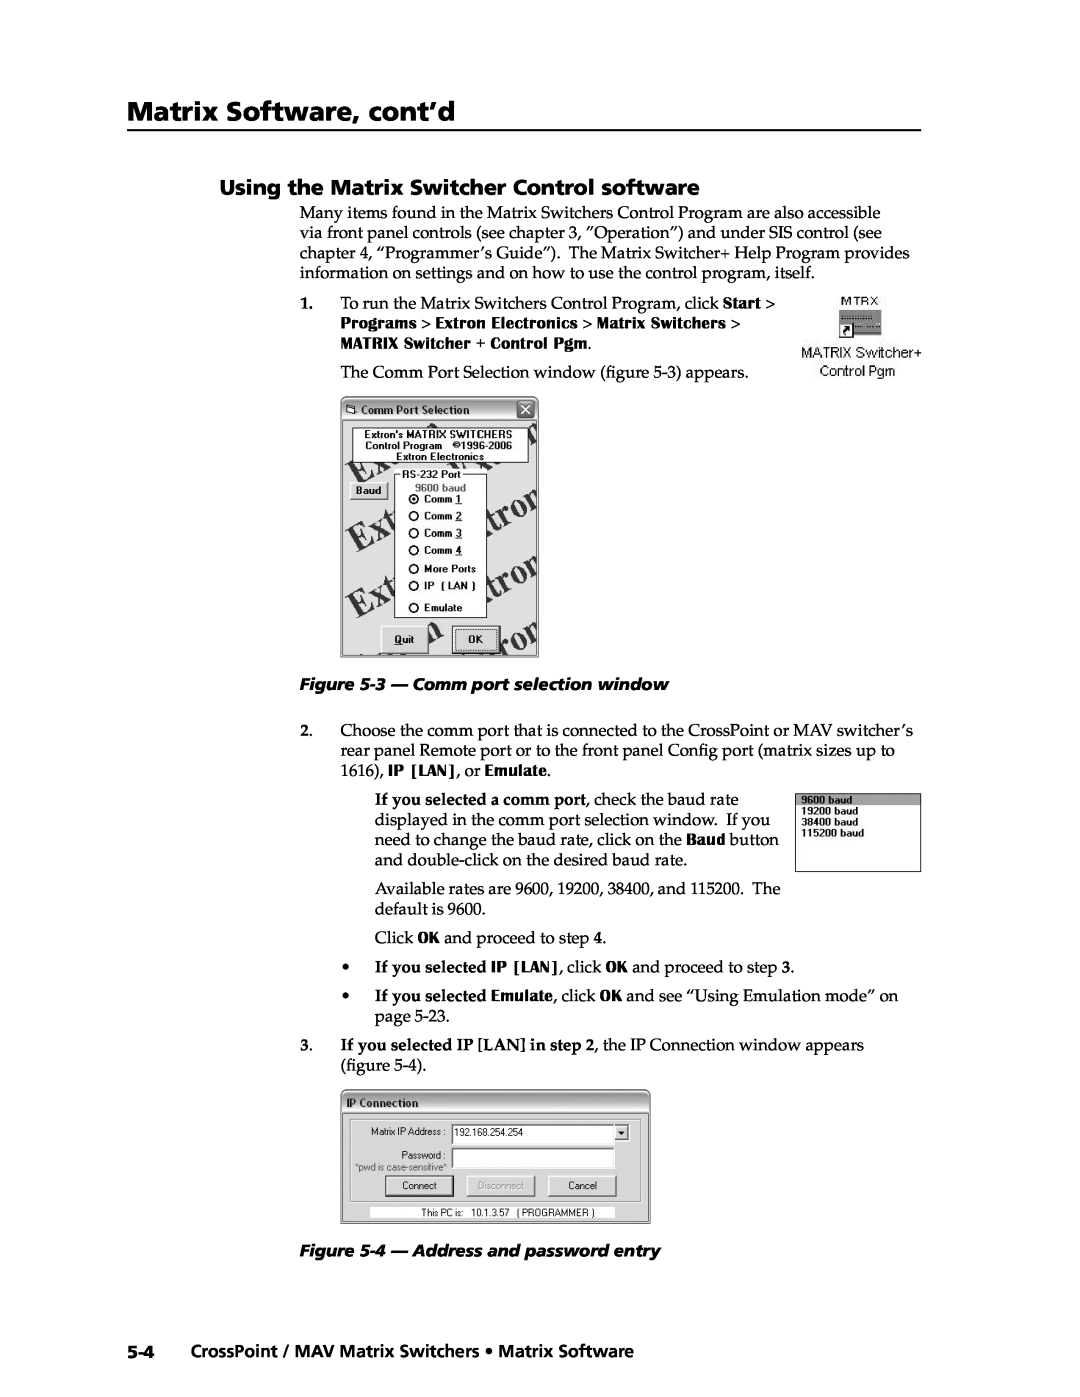 Extron electronic MAV Plus Series, Ultra Series manual Matrix Software, cont’d, Using the Matrix Switcher Control software 